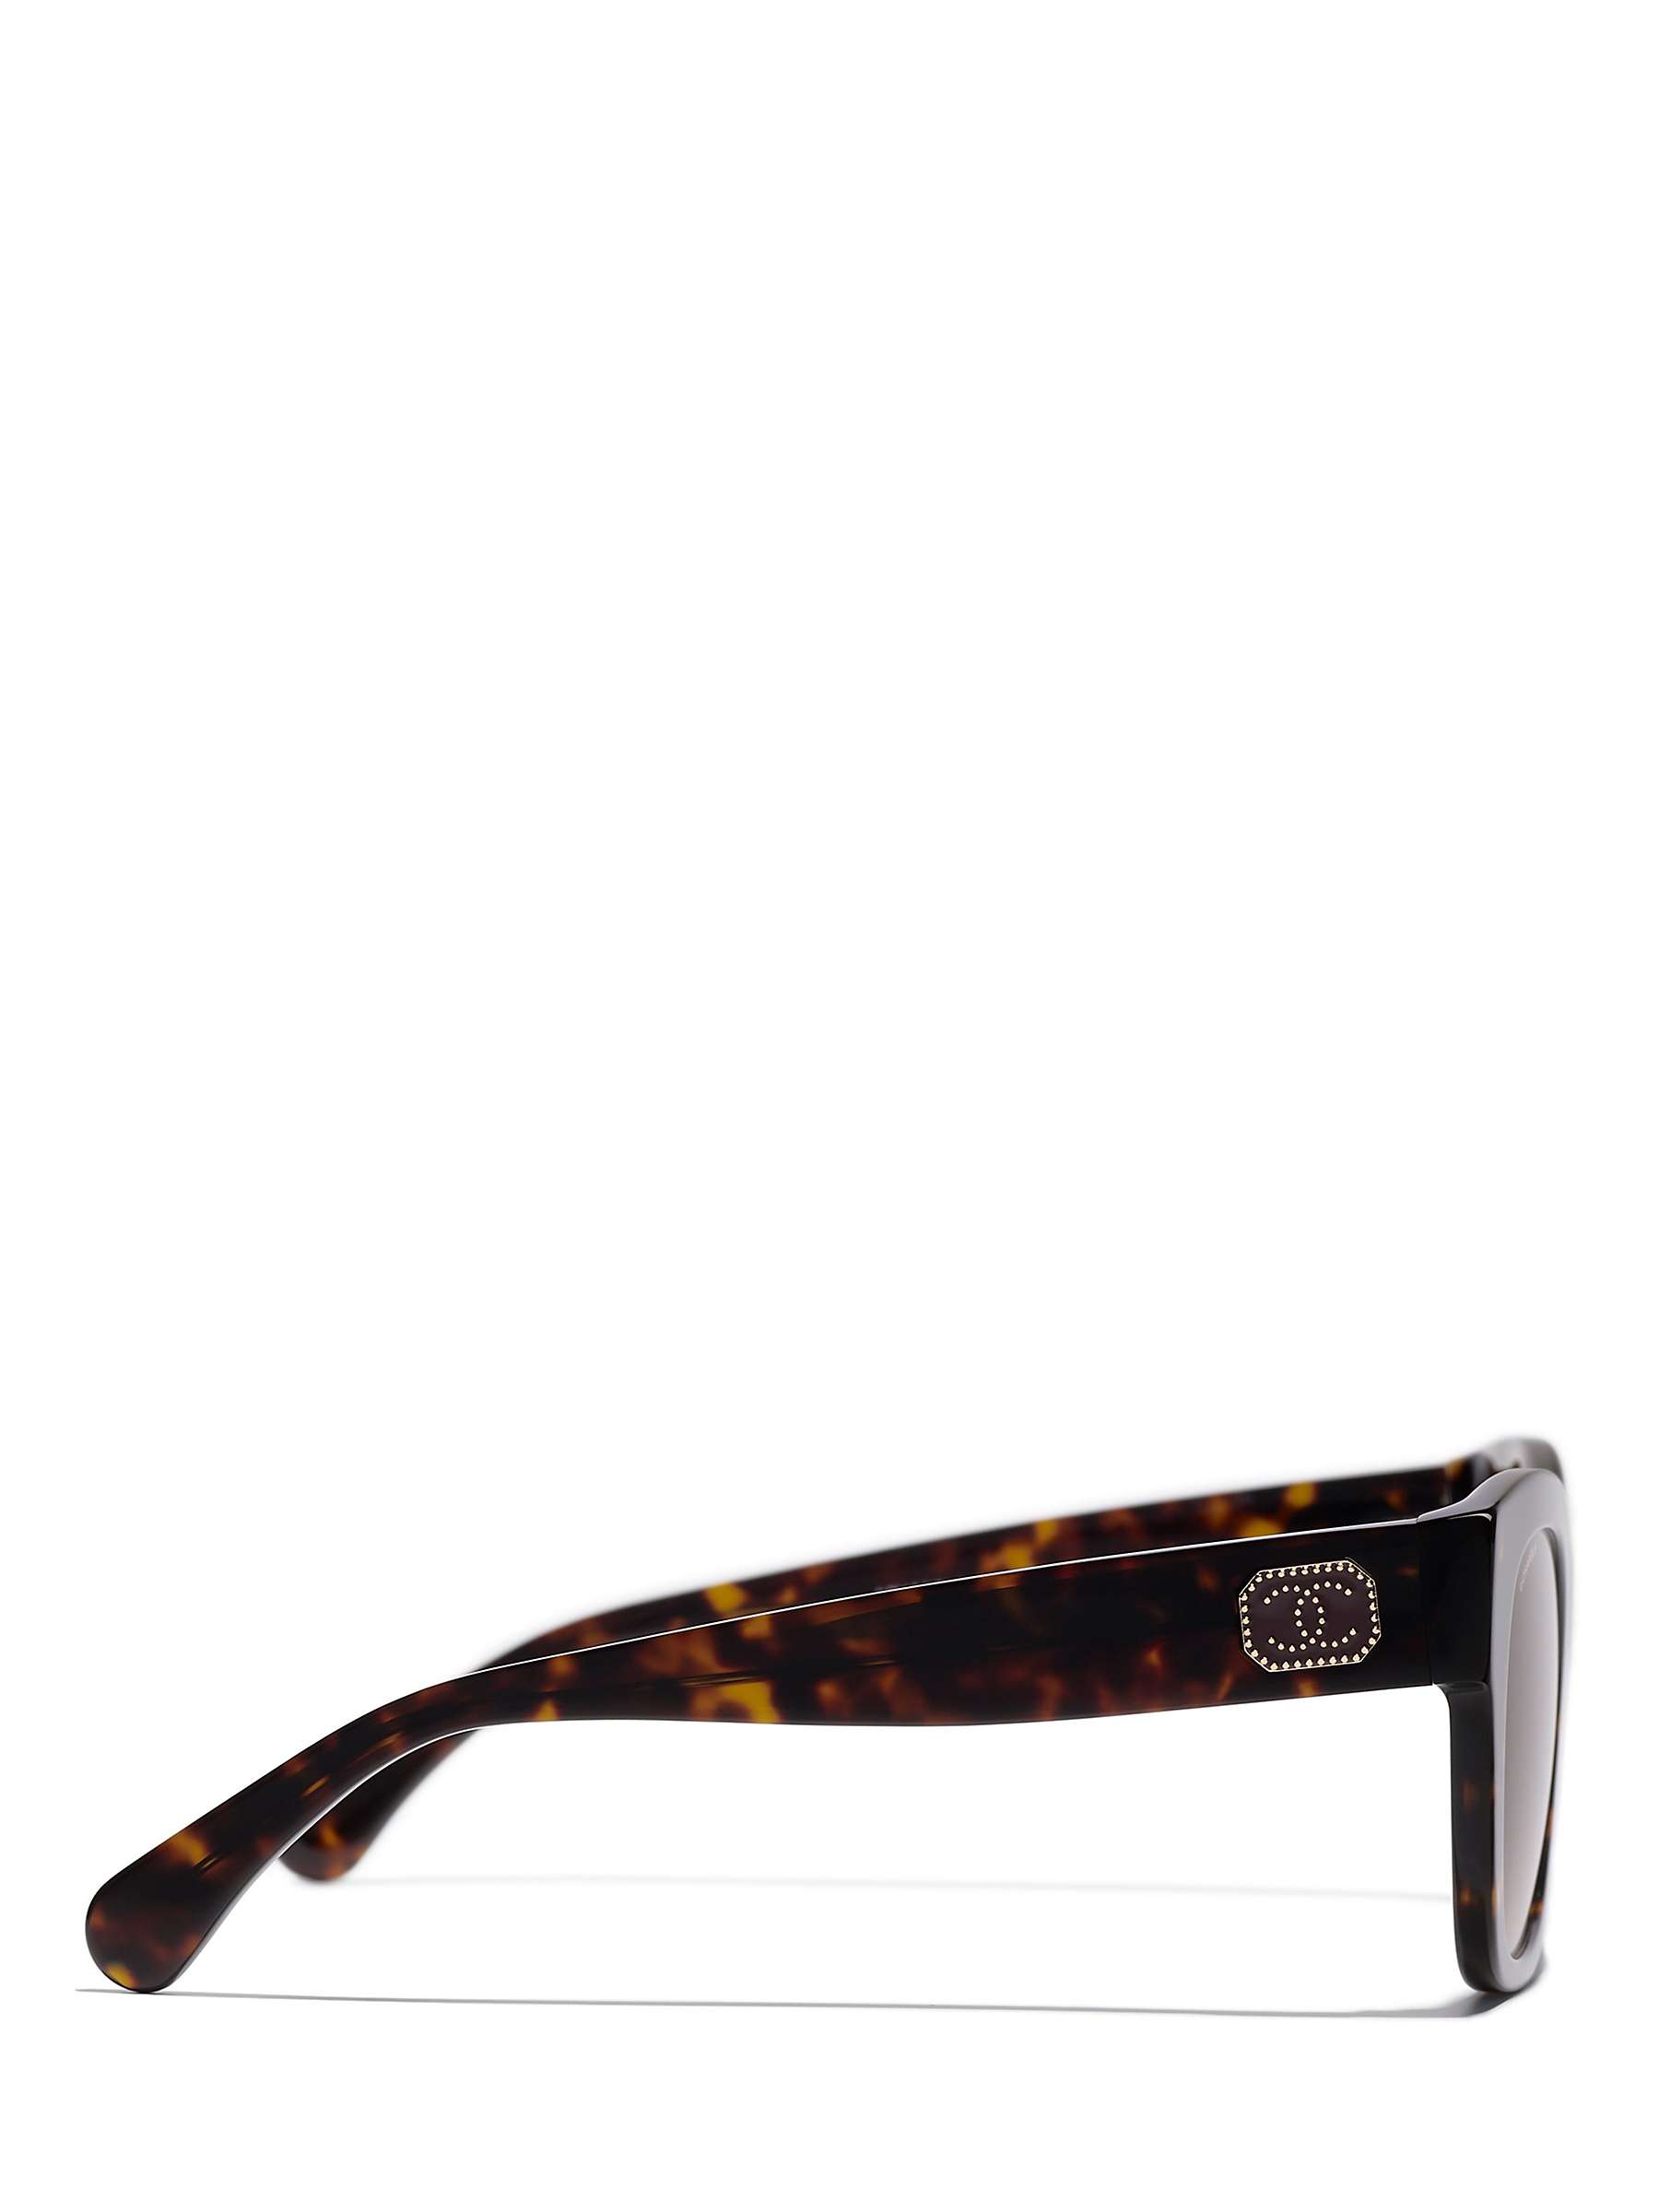 Buy CHANEL Irregular Sunglasses CH5478 Dark Havana/Brown Gradient Online at johnlewis.com